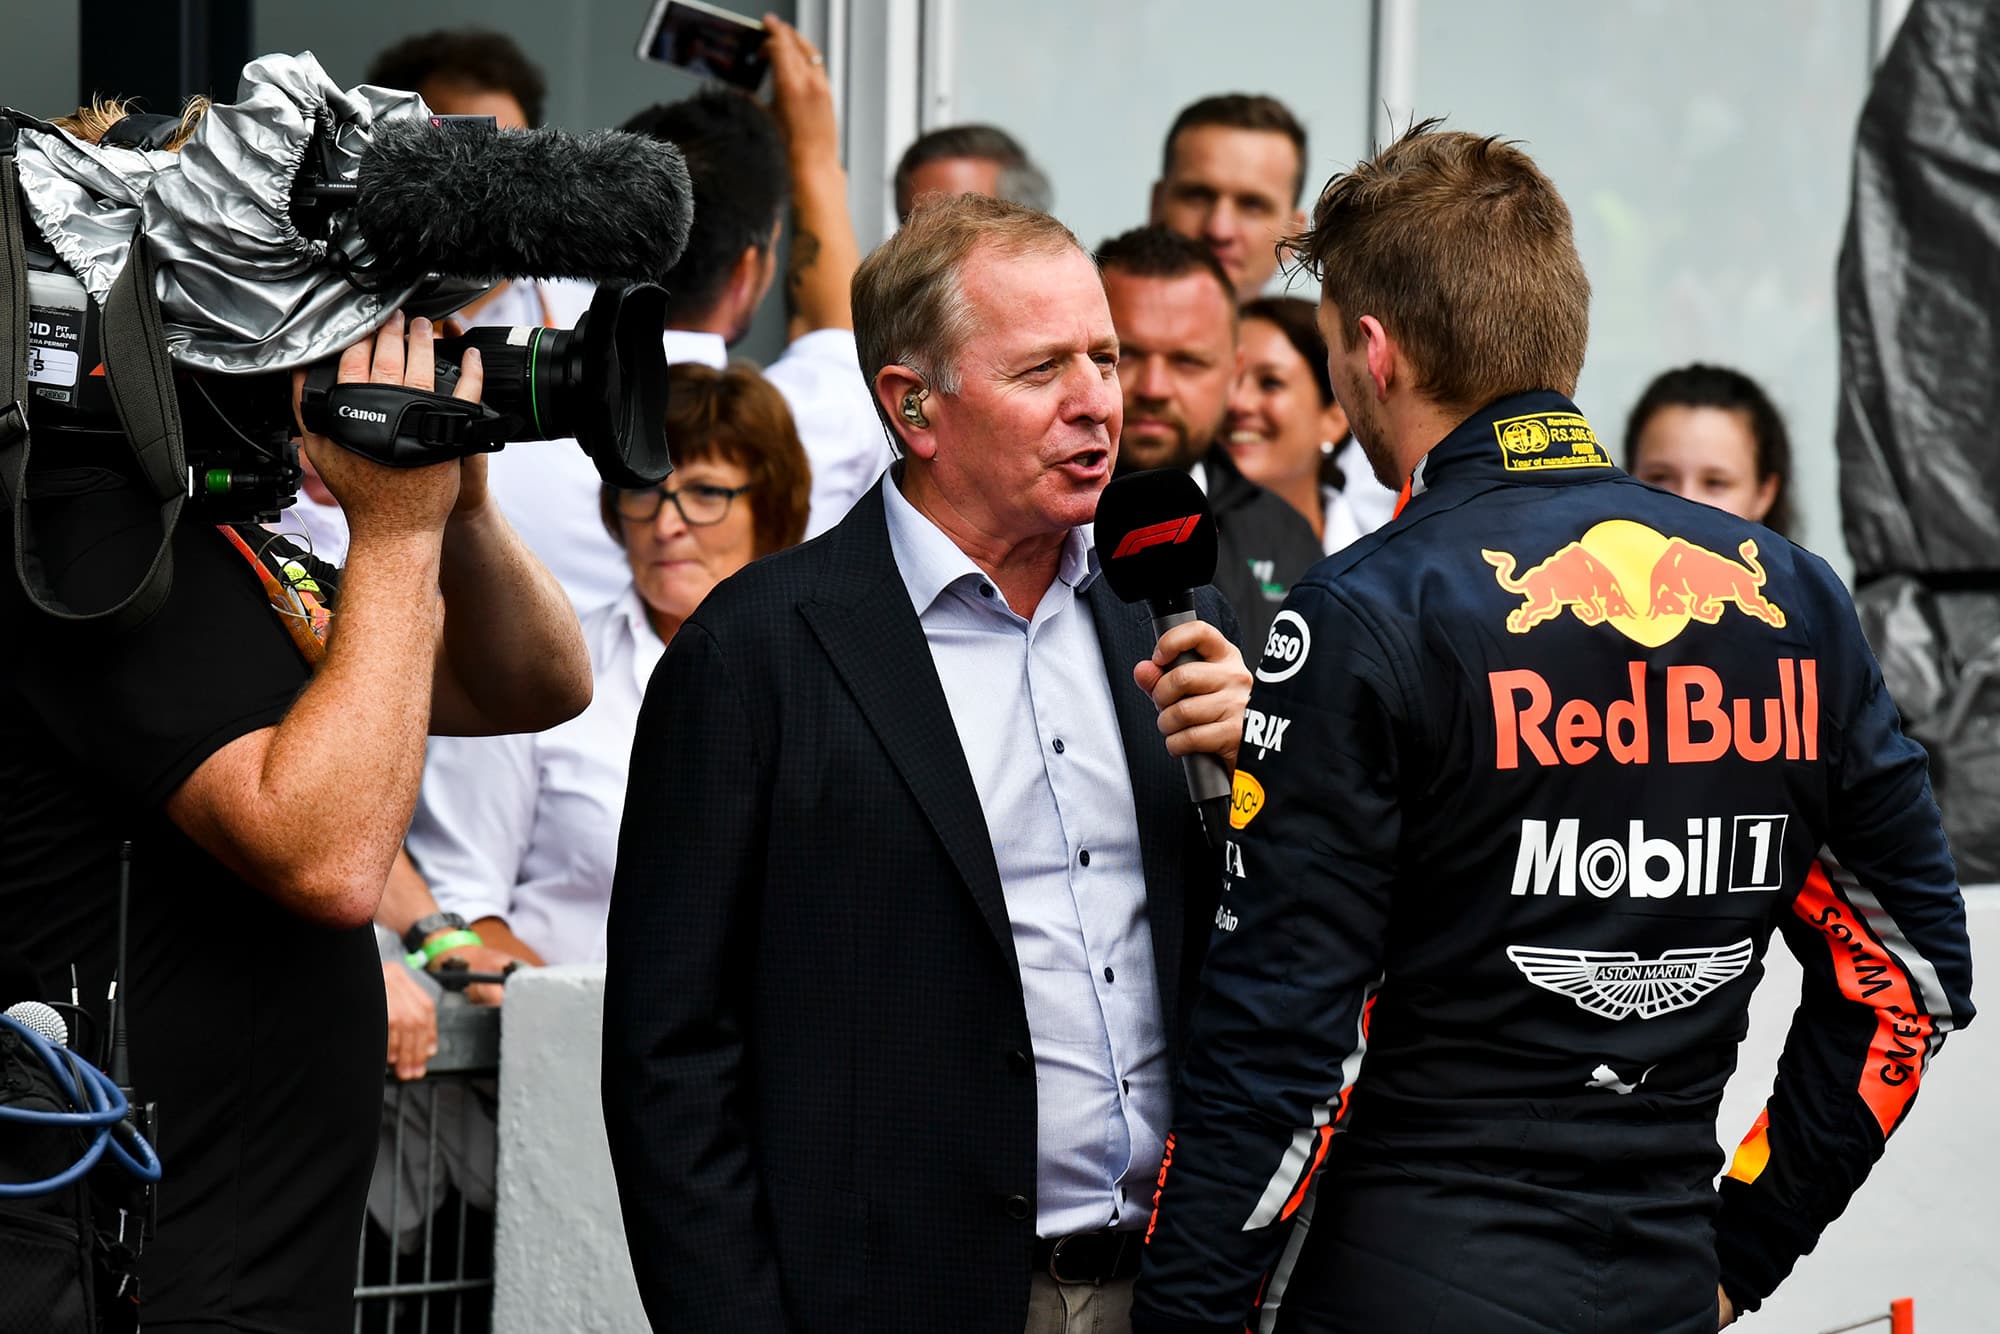 Martin Brundle interviews Max Verstappen after the 2019 Brazilian Grand Prix